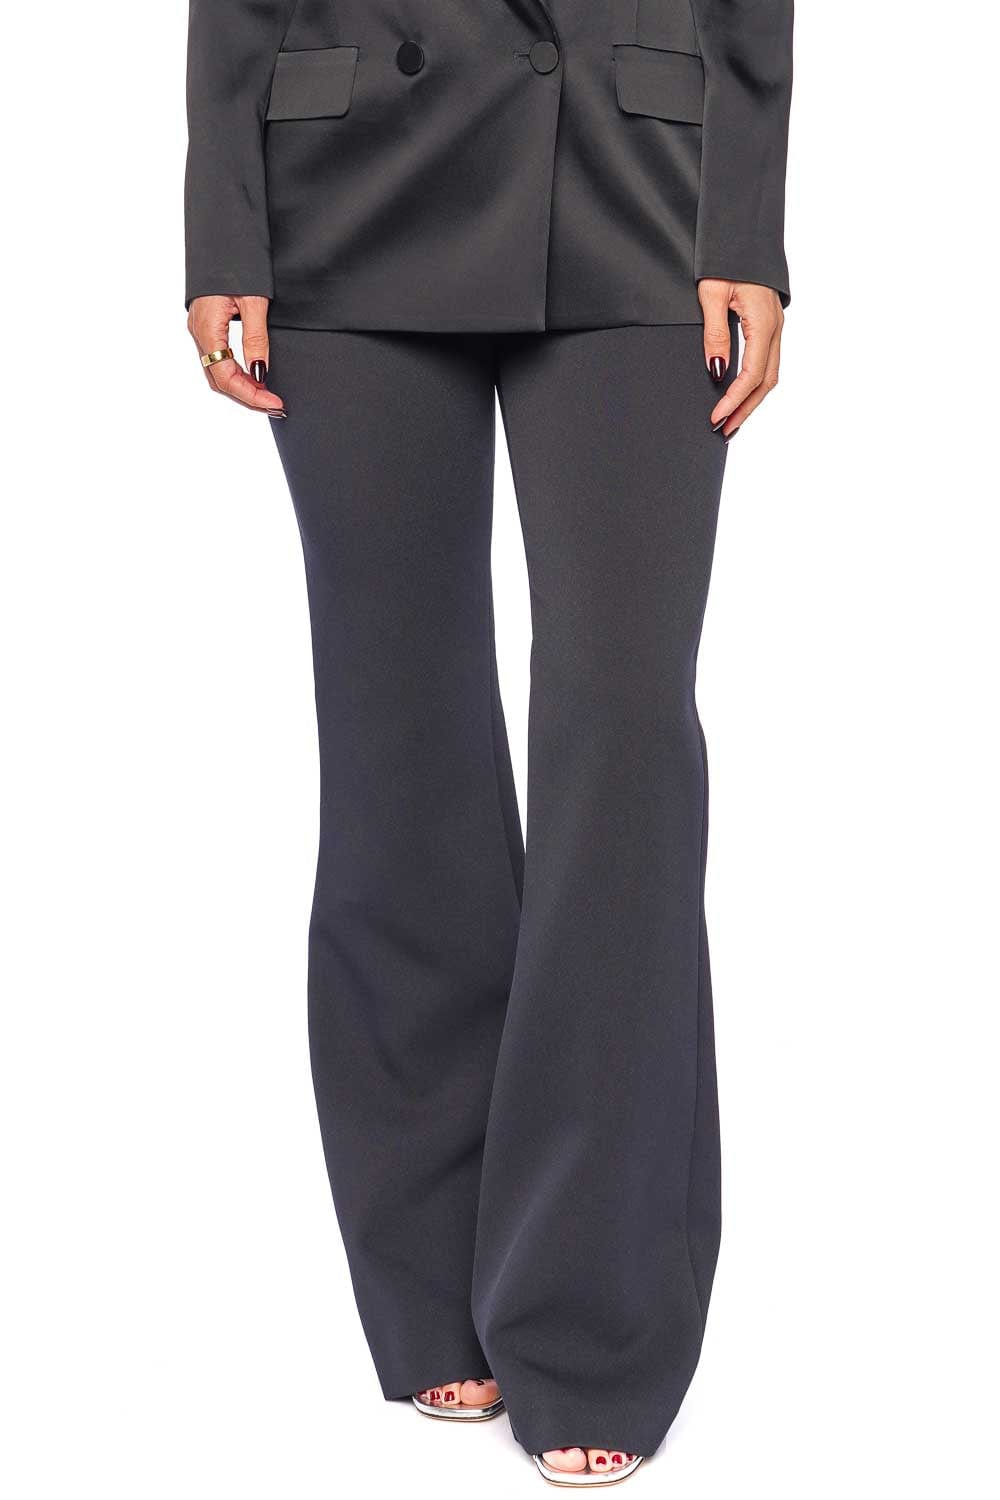 SIMKHAI Kenna Black Tailored Trousers